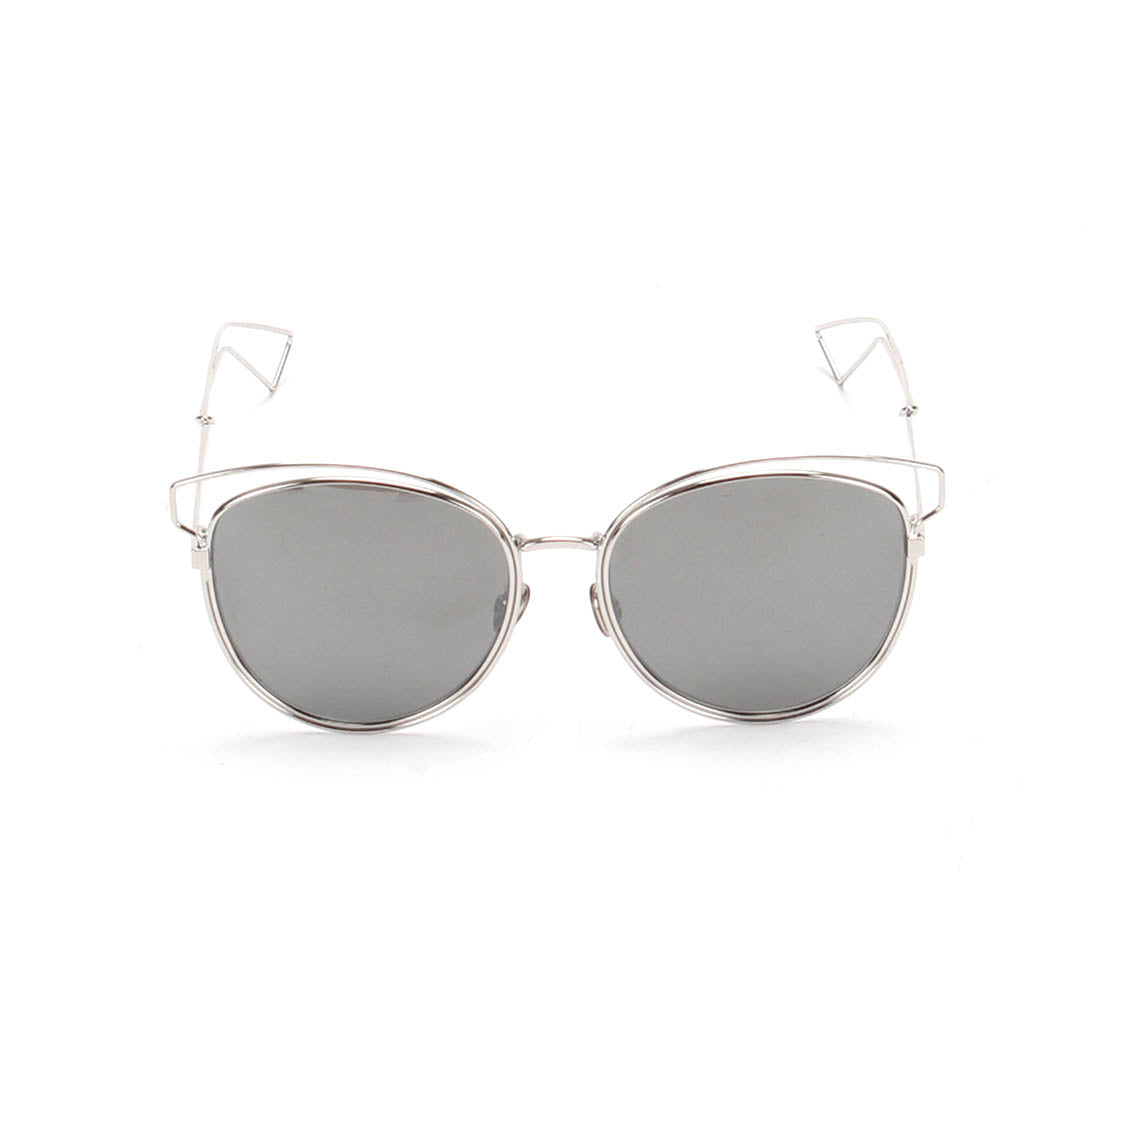 Sideral 2 Sunglasses